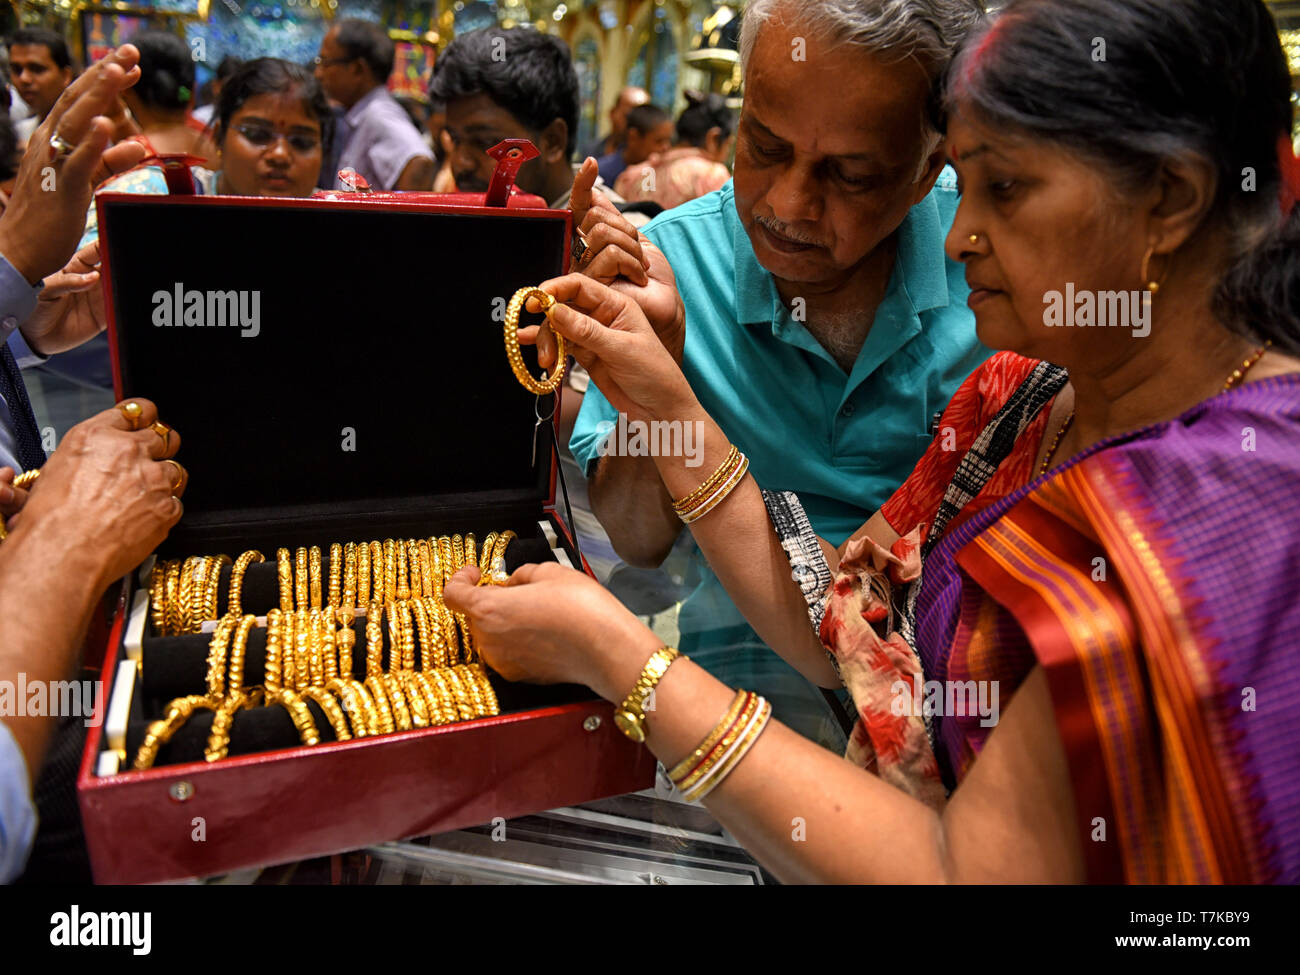 A couple seen purchasing golden ornaments during Akshaya Tritiya festival  day at Kolkata. Akshaya Tritiya is a very popular festival among the Hindus  and Jains. The most popular activity during the festival